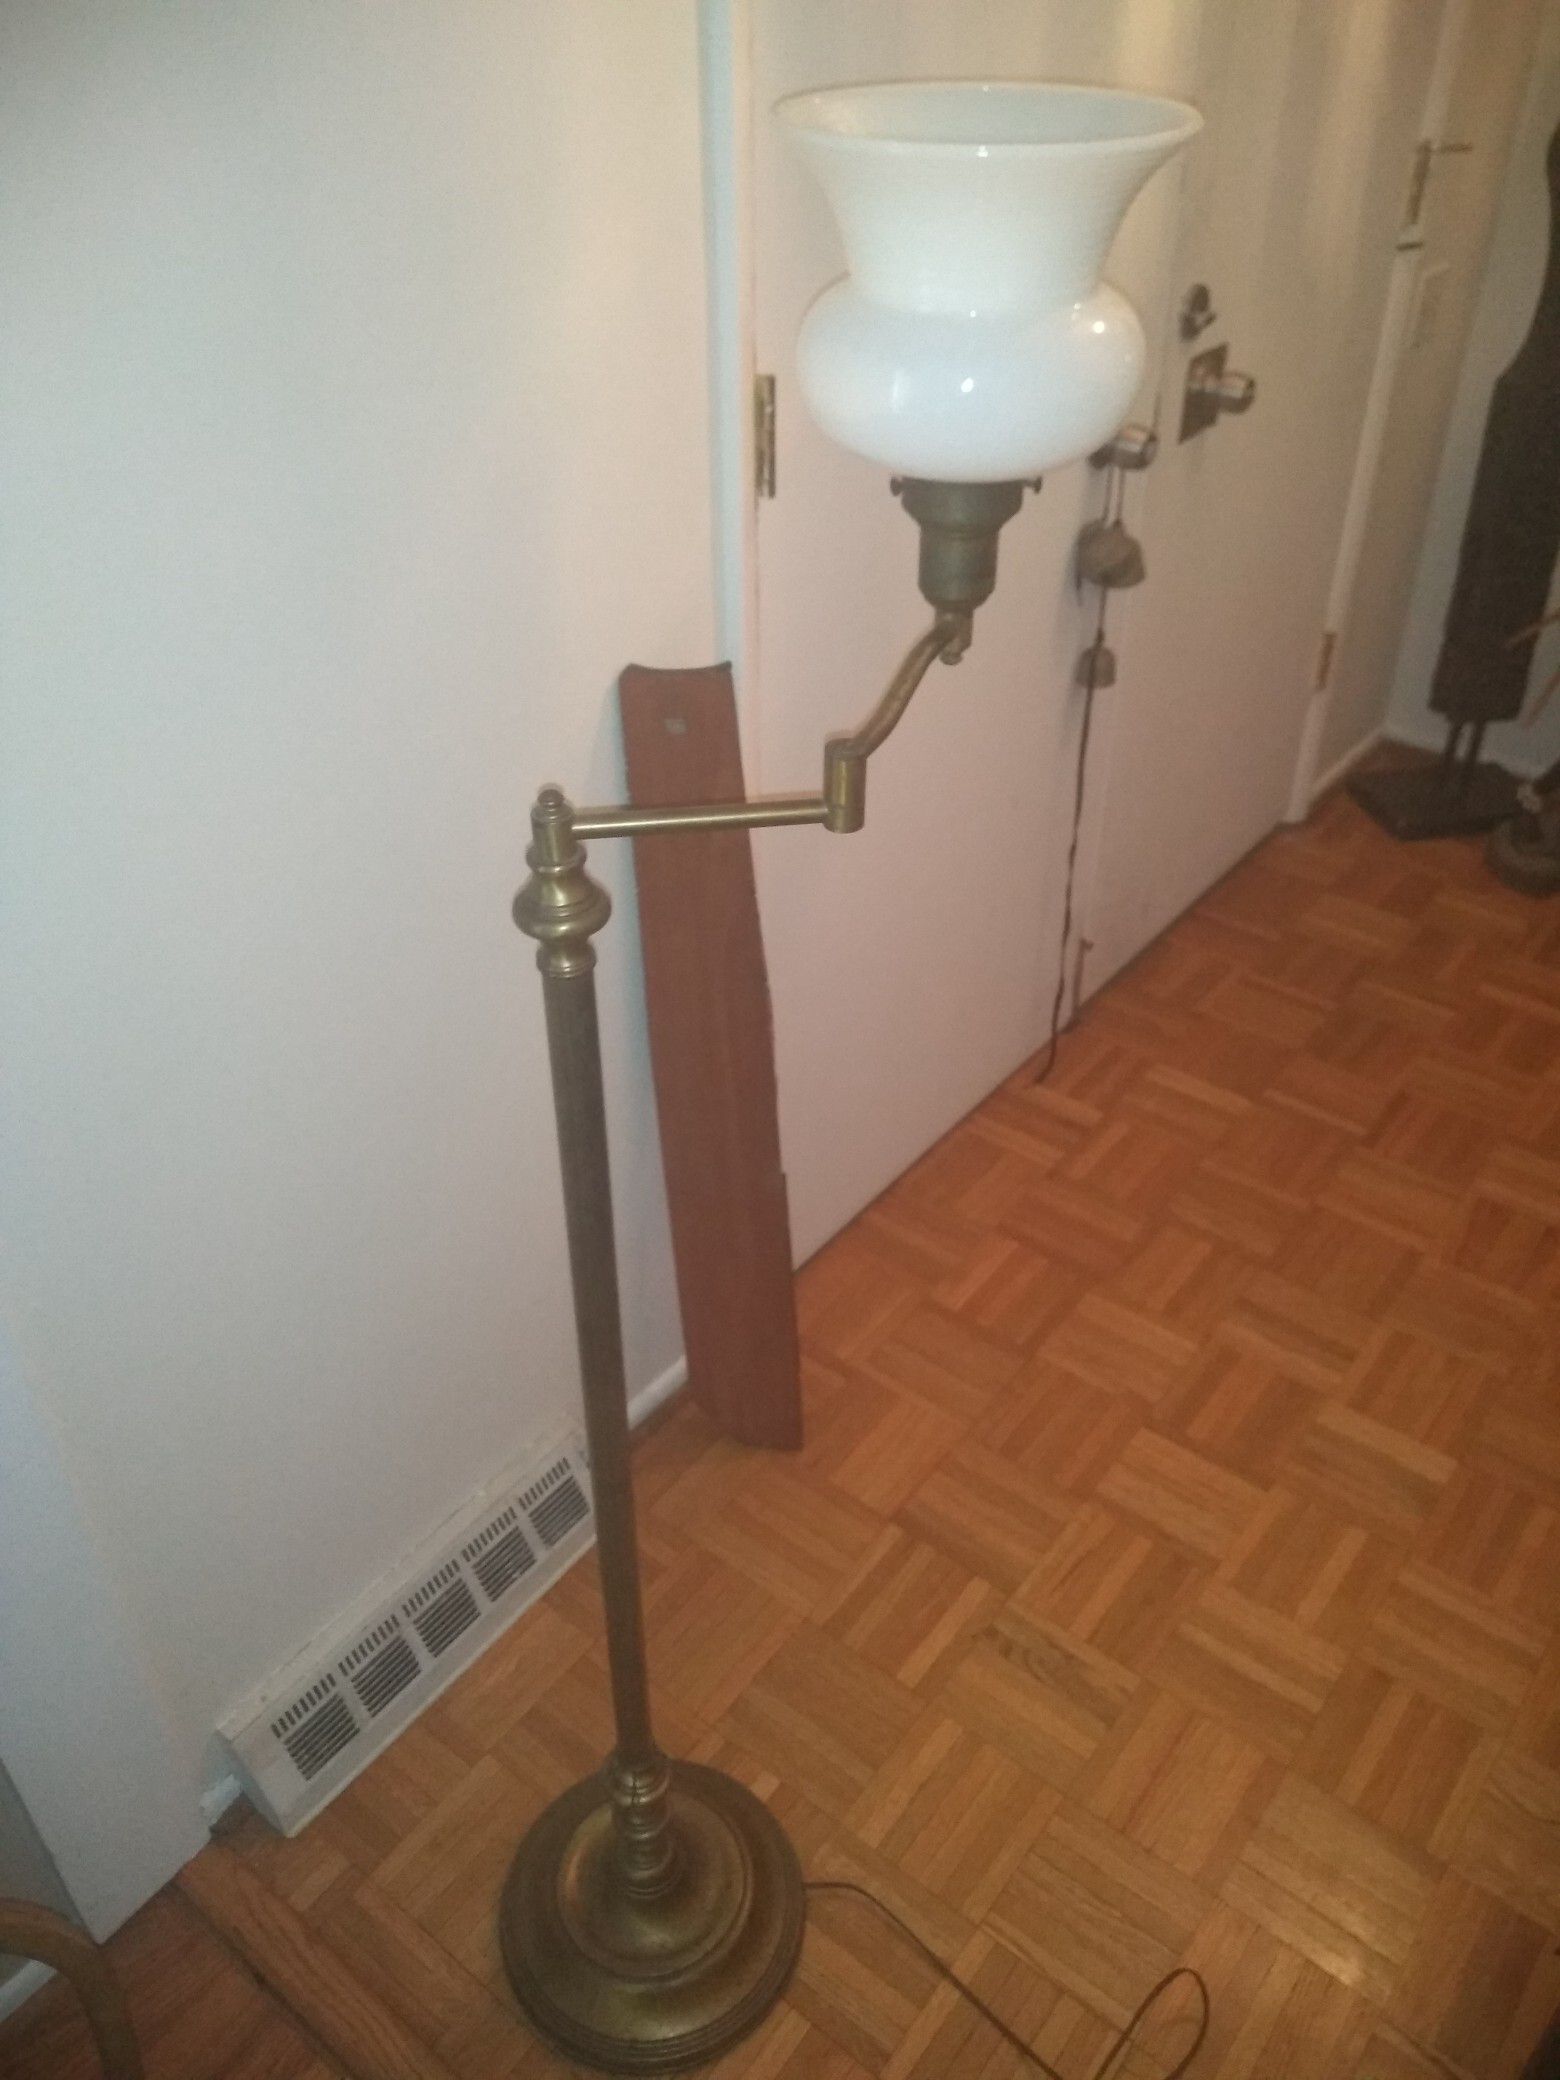 Vintage Brass Standing Lamp